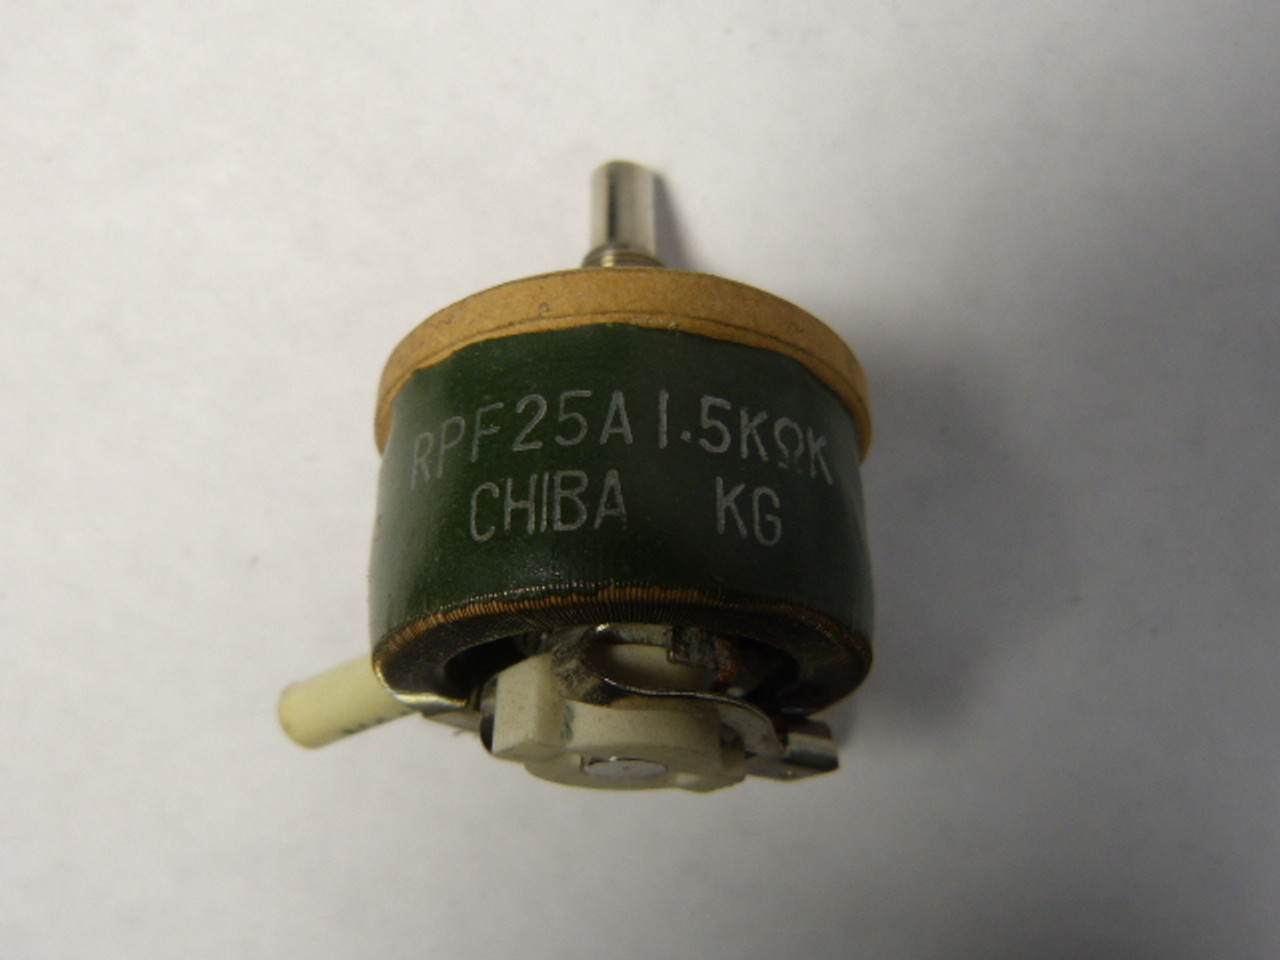 Chiba RPF25A1.5K Ceramic Wirewound Potentiometer USED